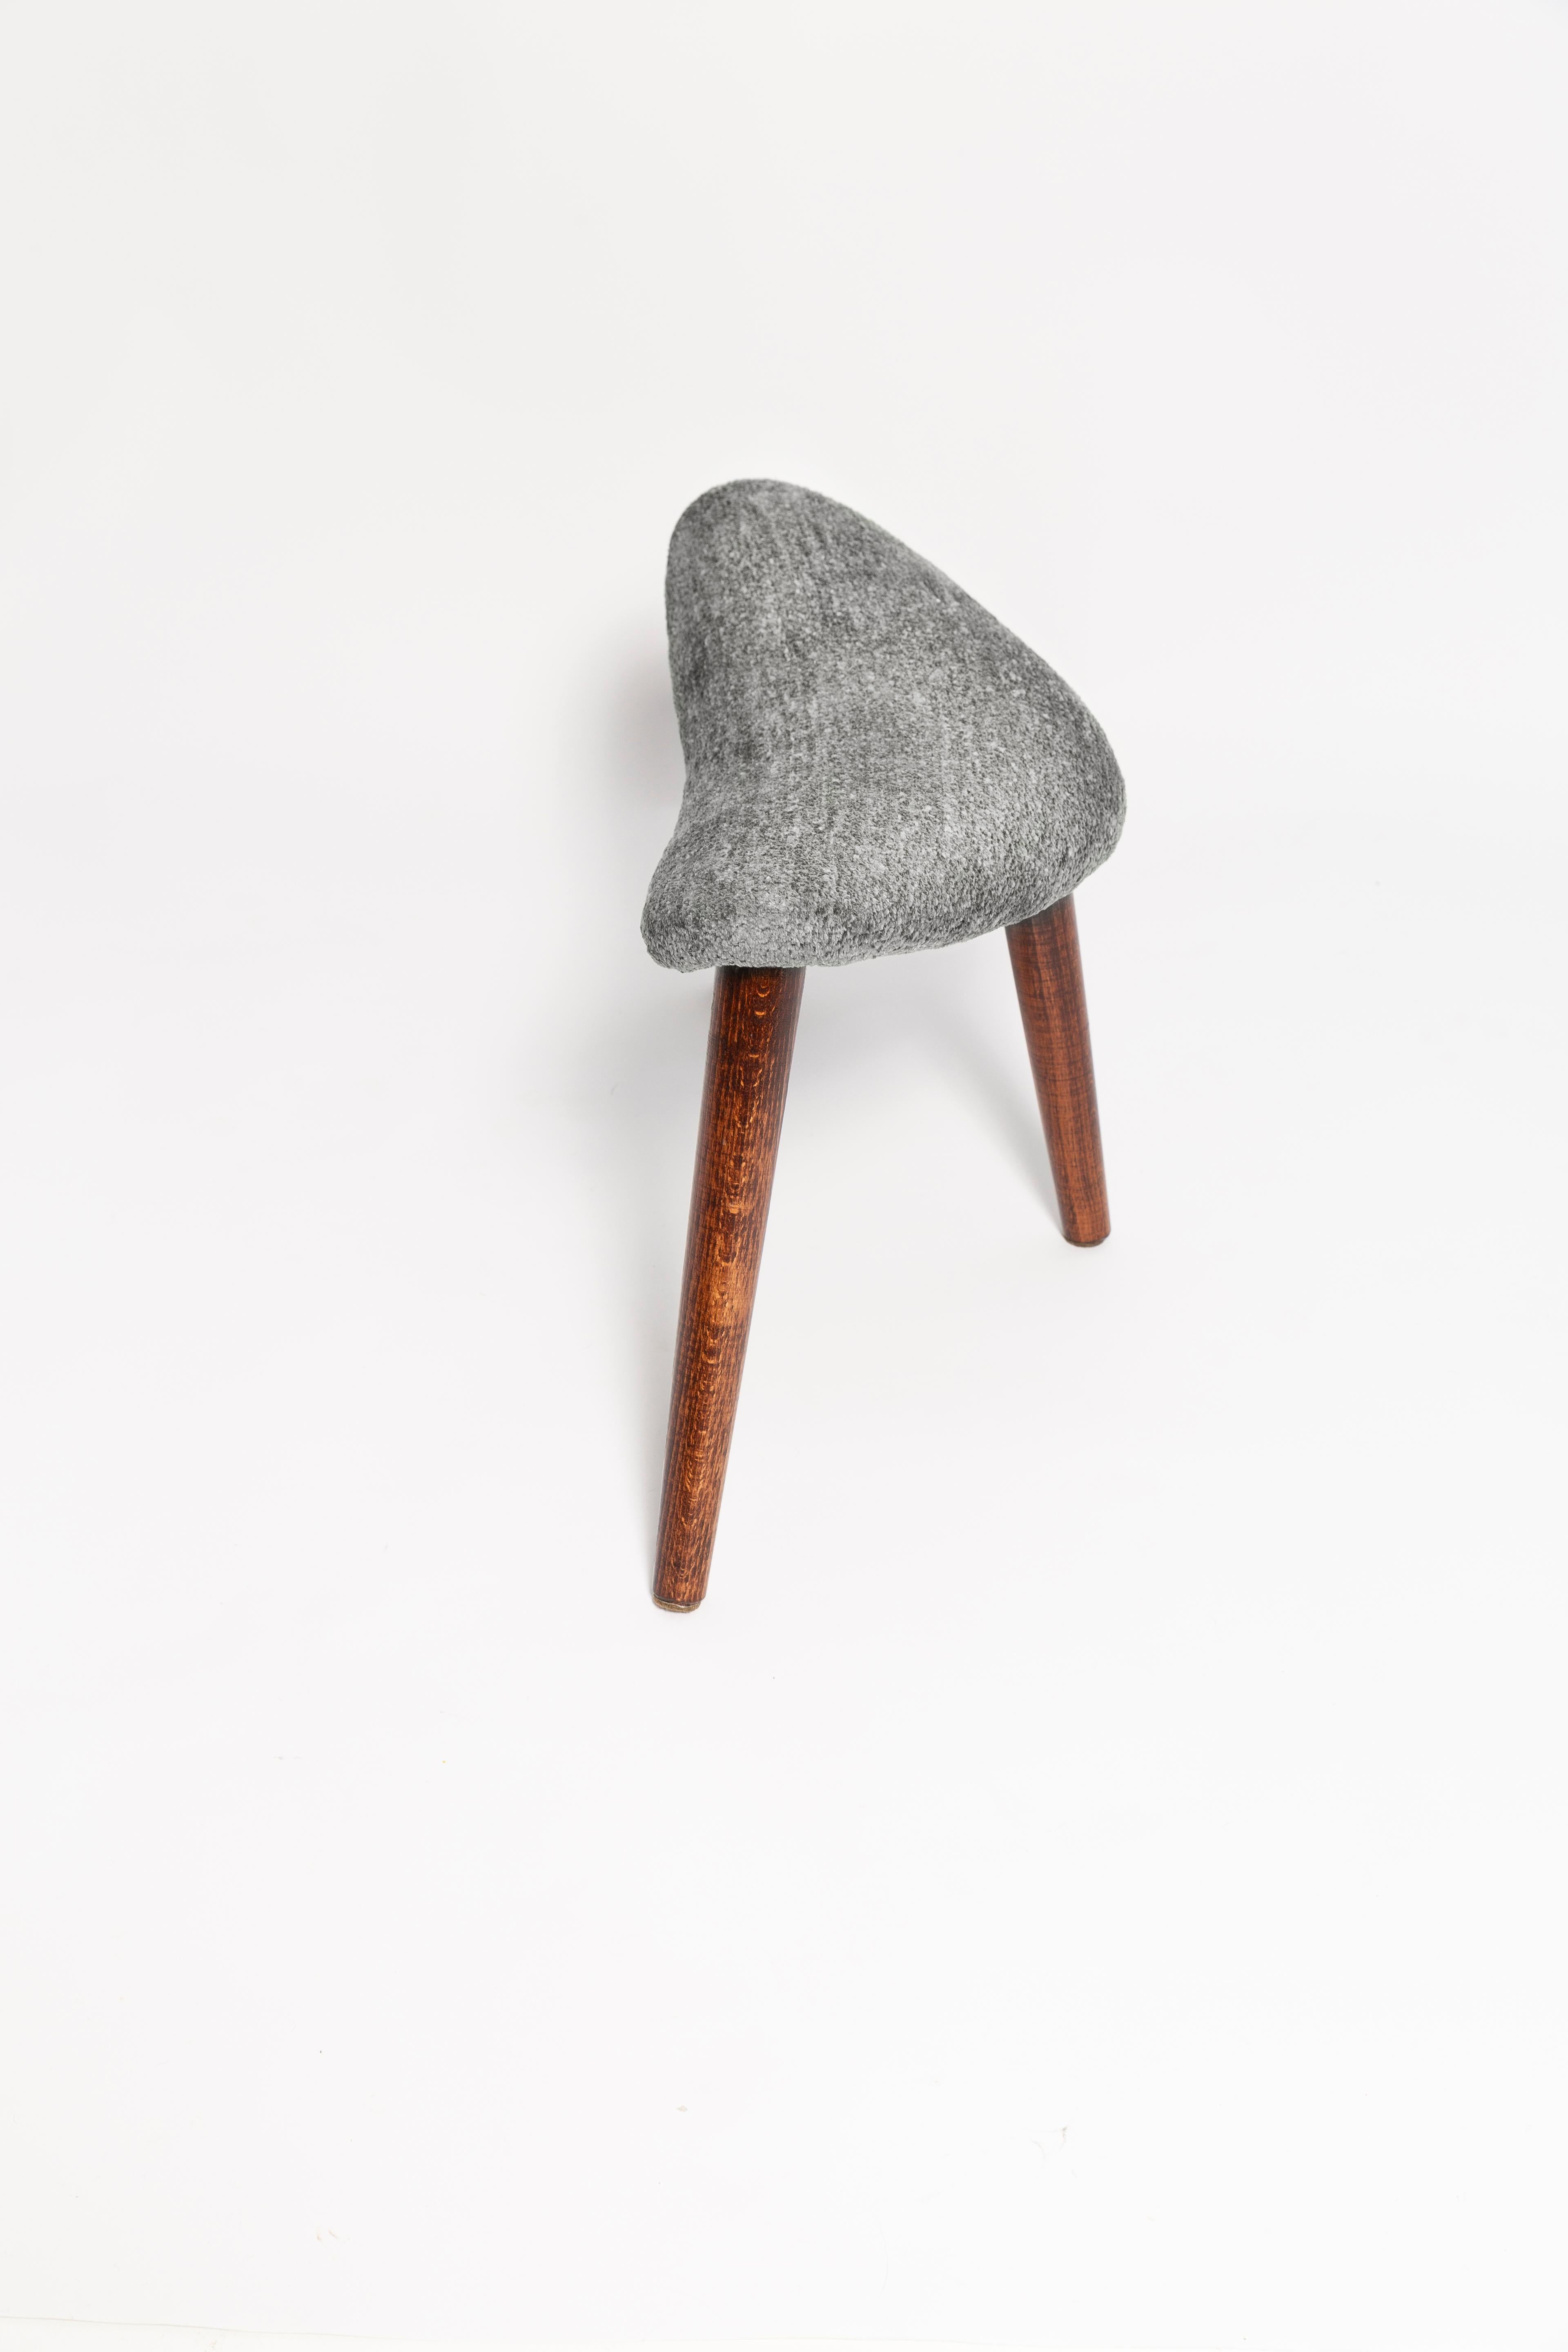 Mid Century Heart Chair and Stool, Gray Velvet, Dark Wood, Europe 1960s For Sale 7